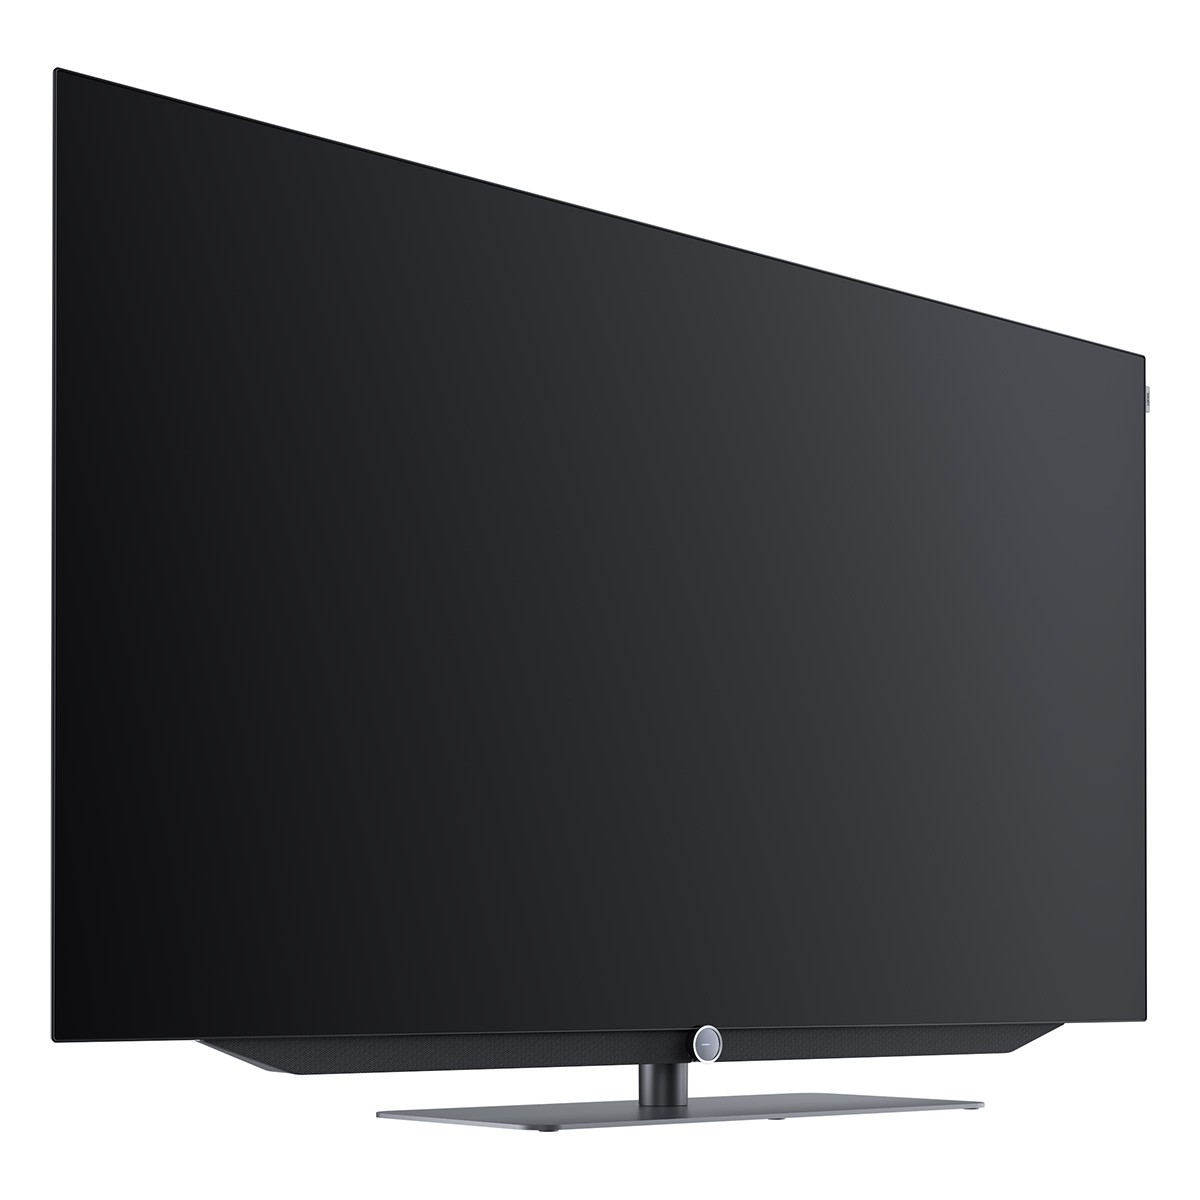 Televizorius OLED 4K 65" TV bild v.65 dr+